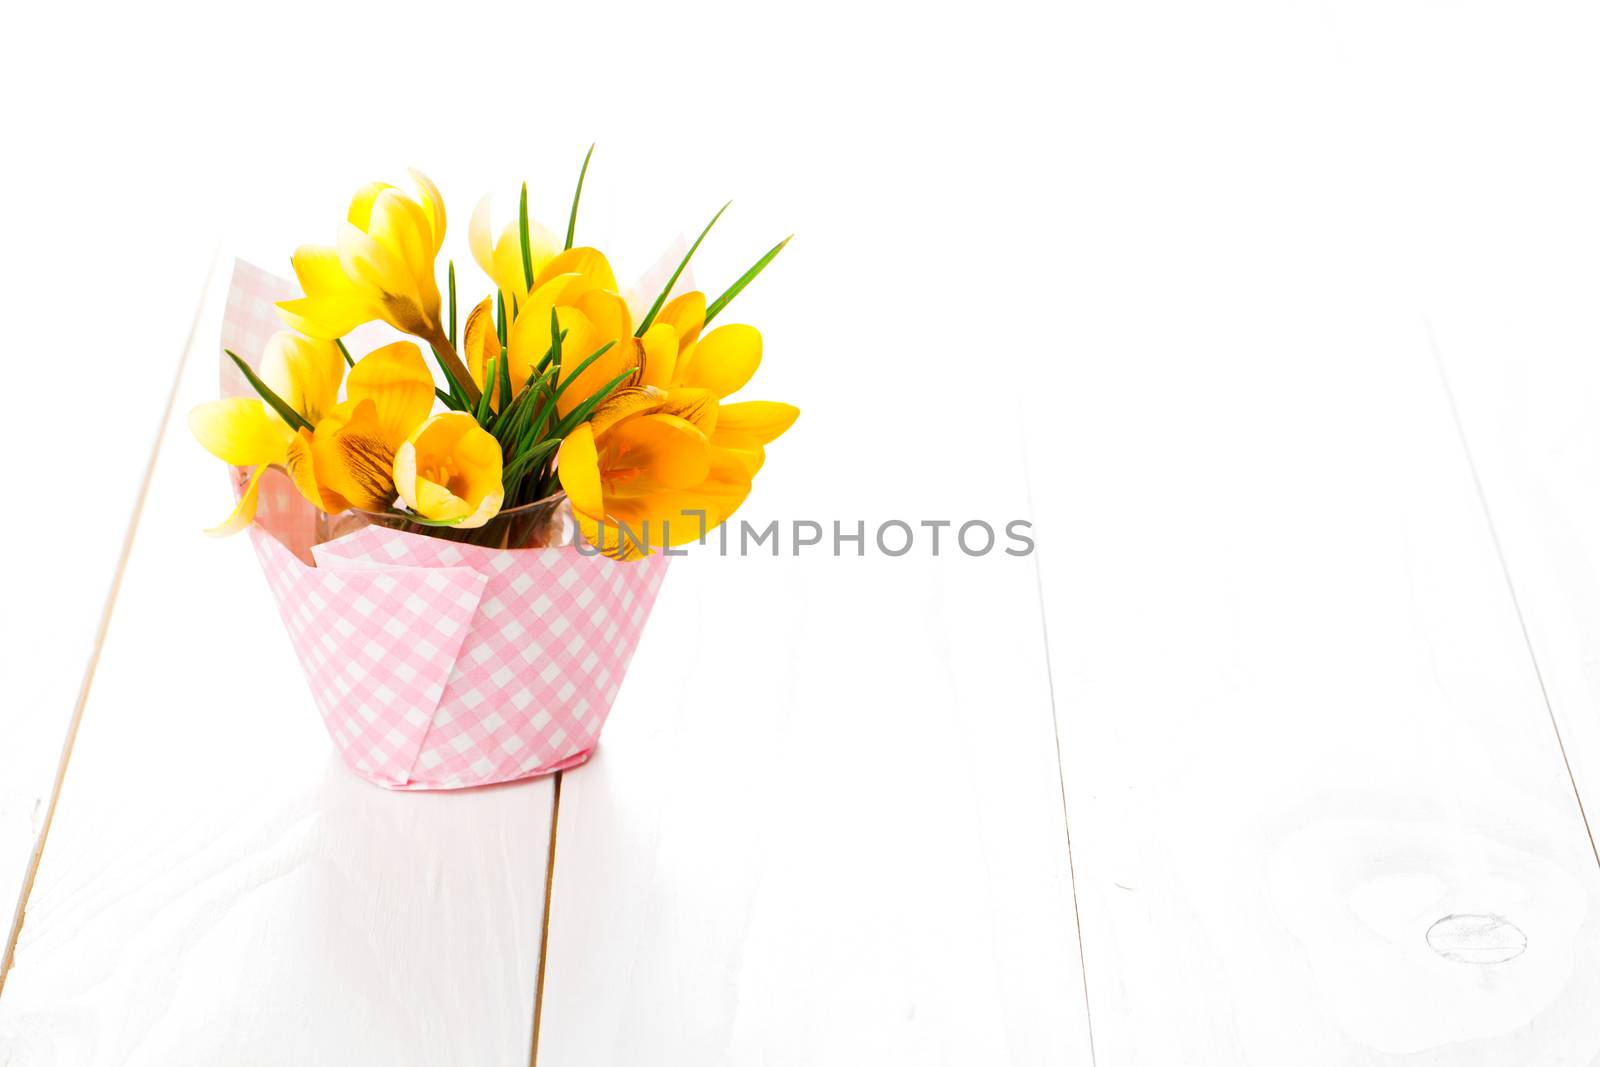 crocus flowers on white wooden background   by motorolka